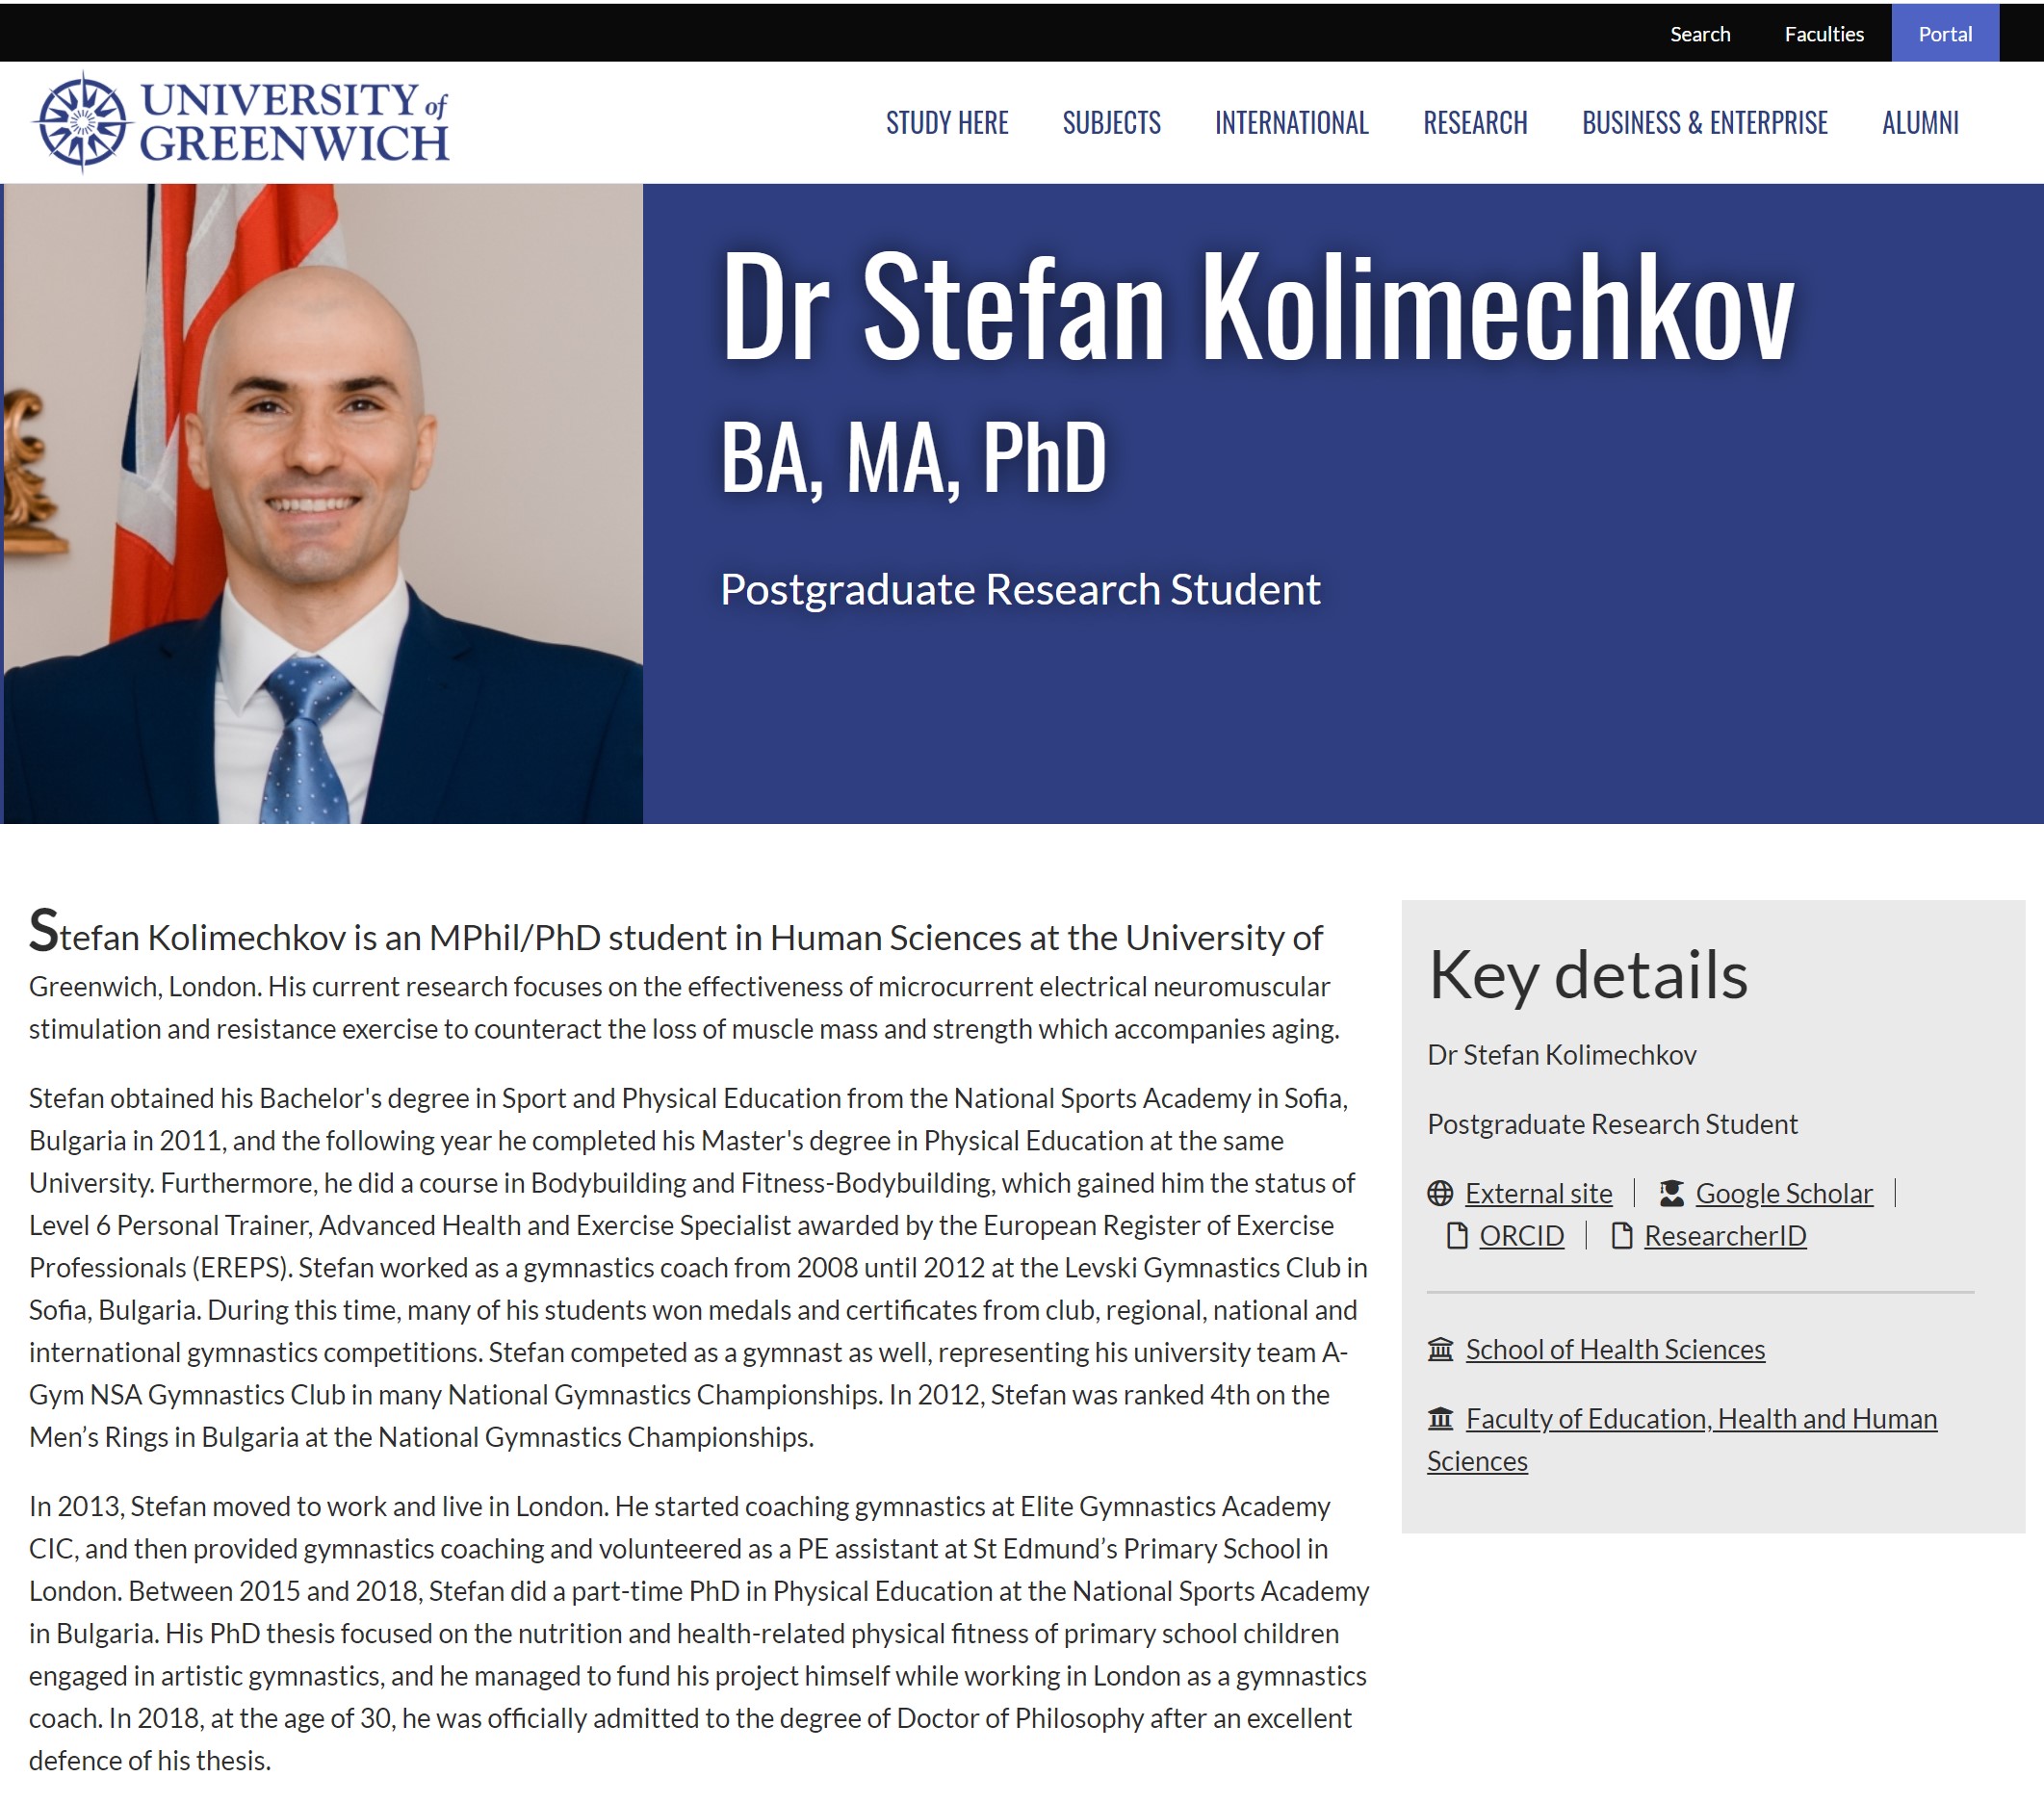 Dr Stefan Kolimechkov - Student Profile at the University of Greenwich